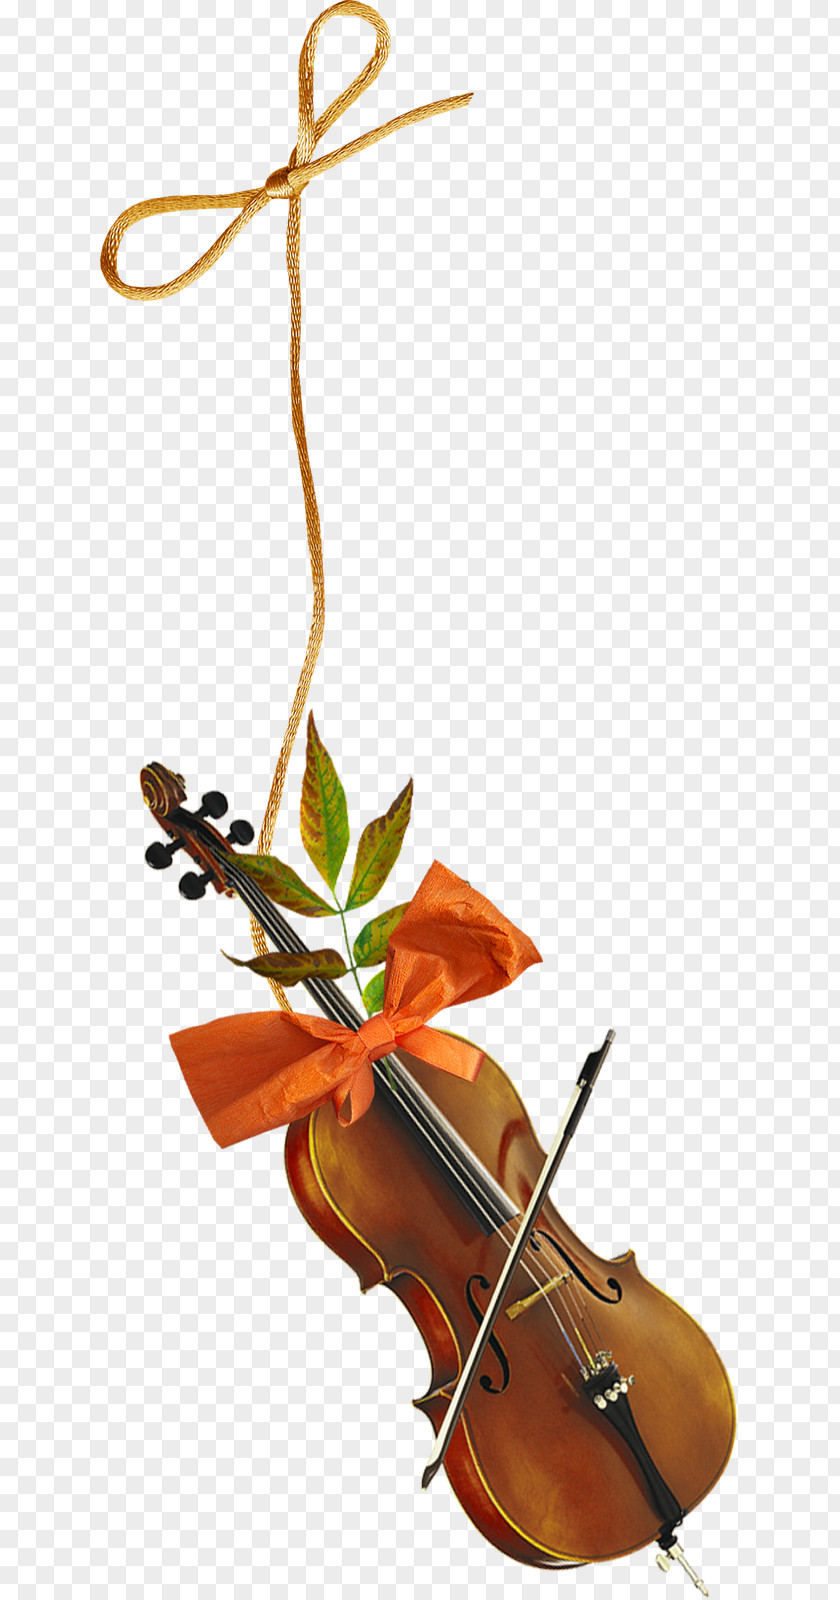 Violin Violone Cello Viola Musical Instruments PNG